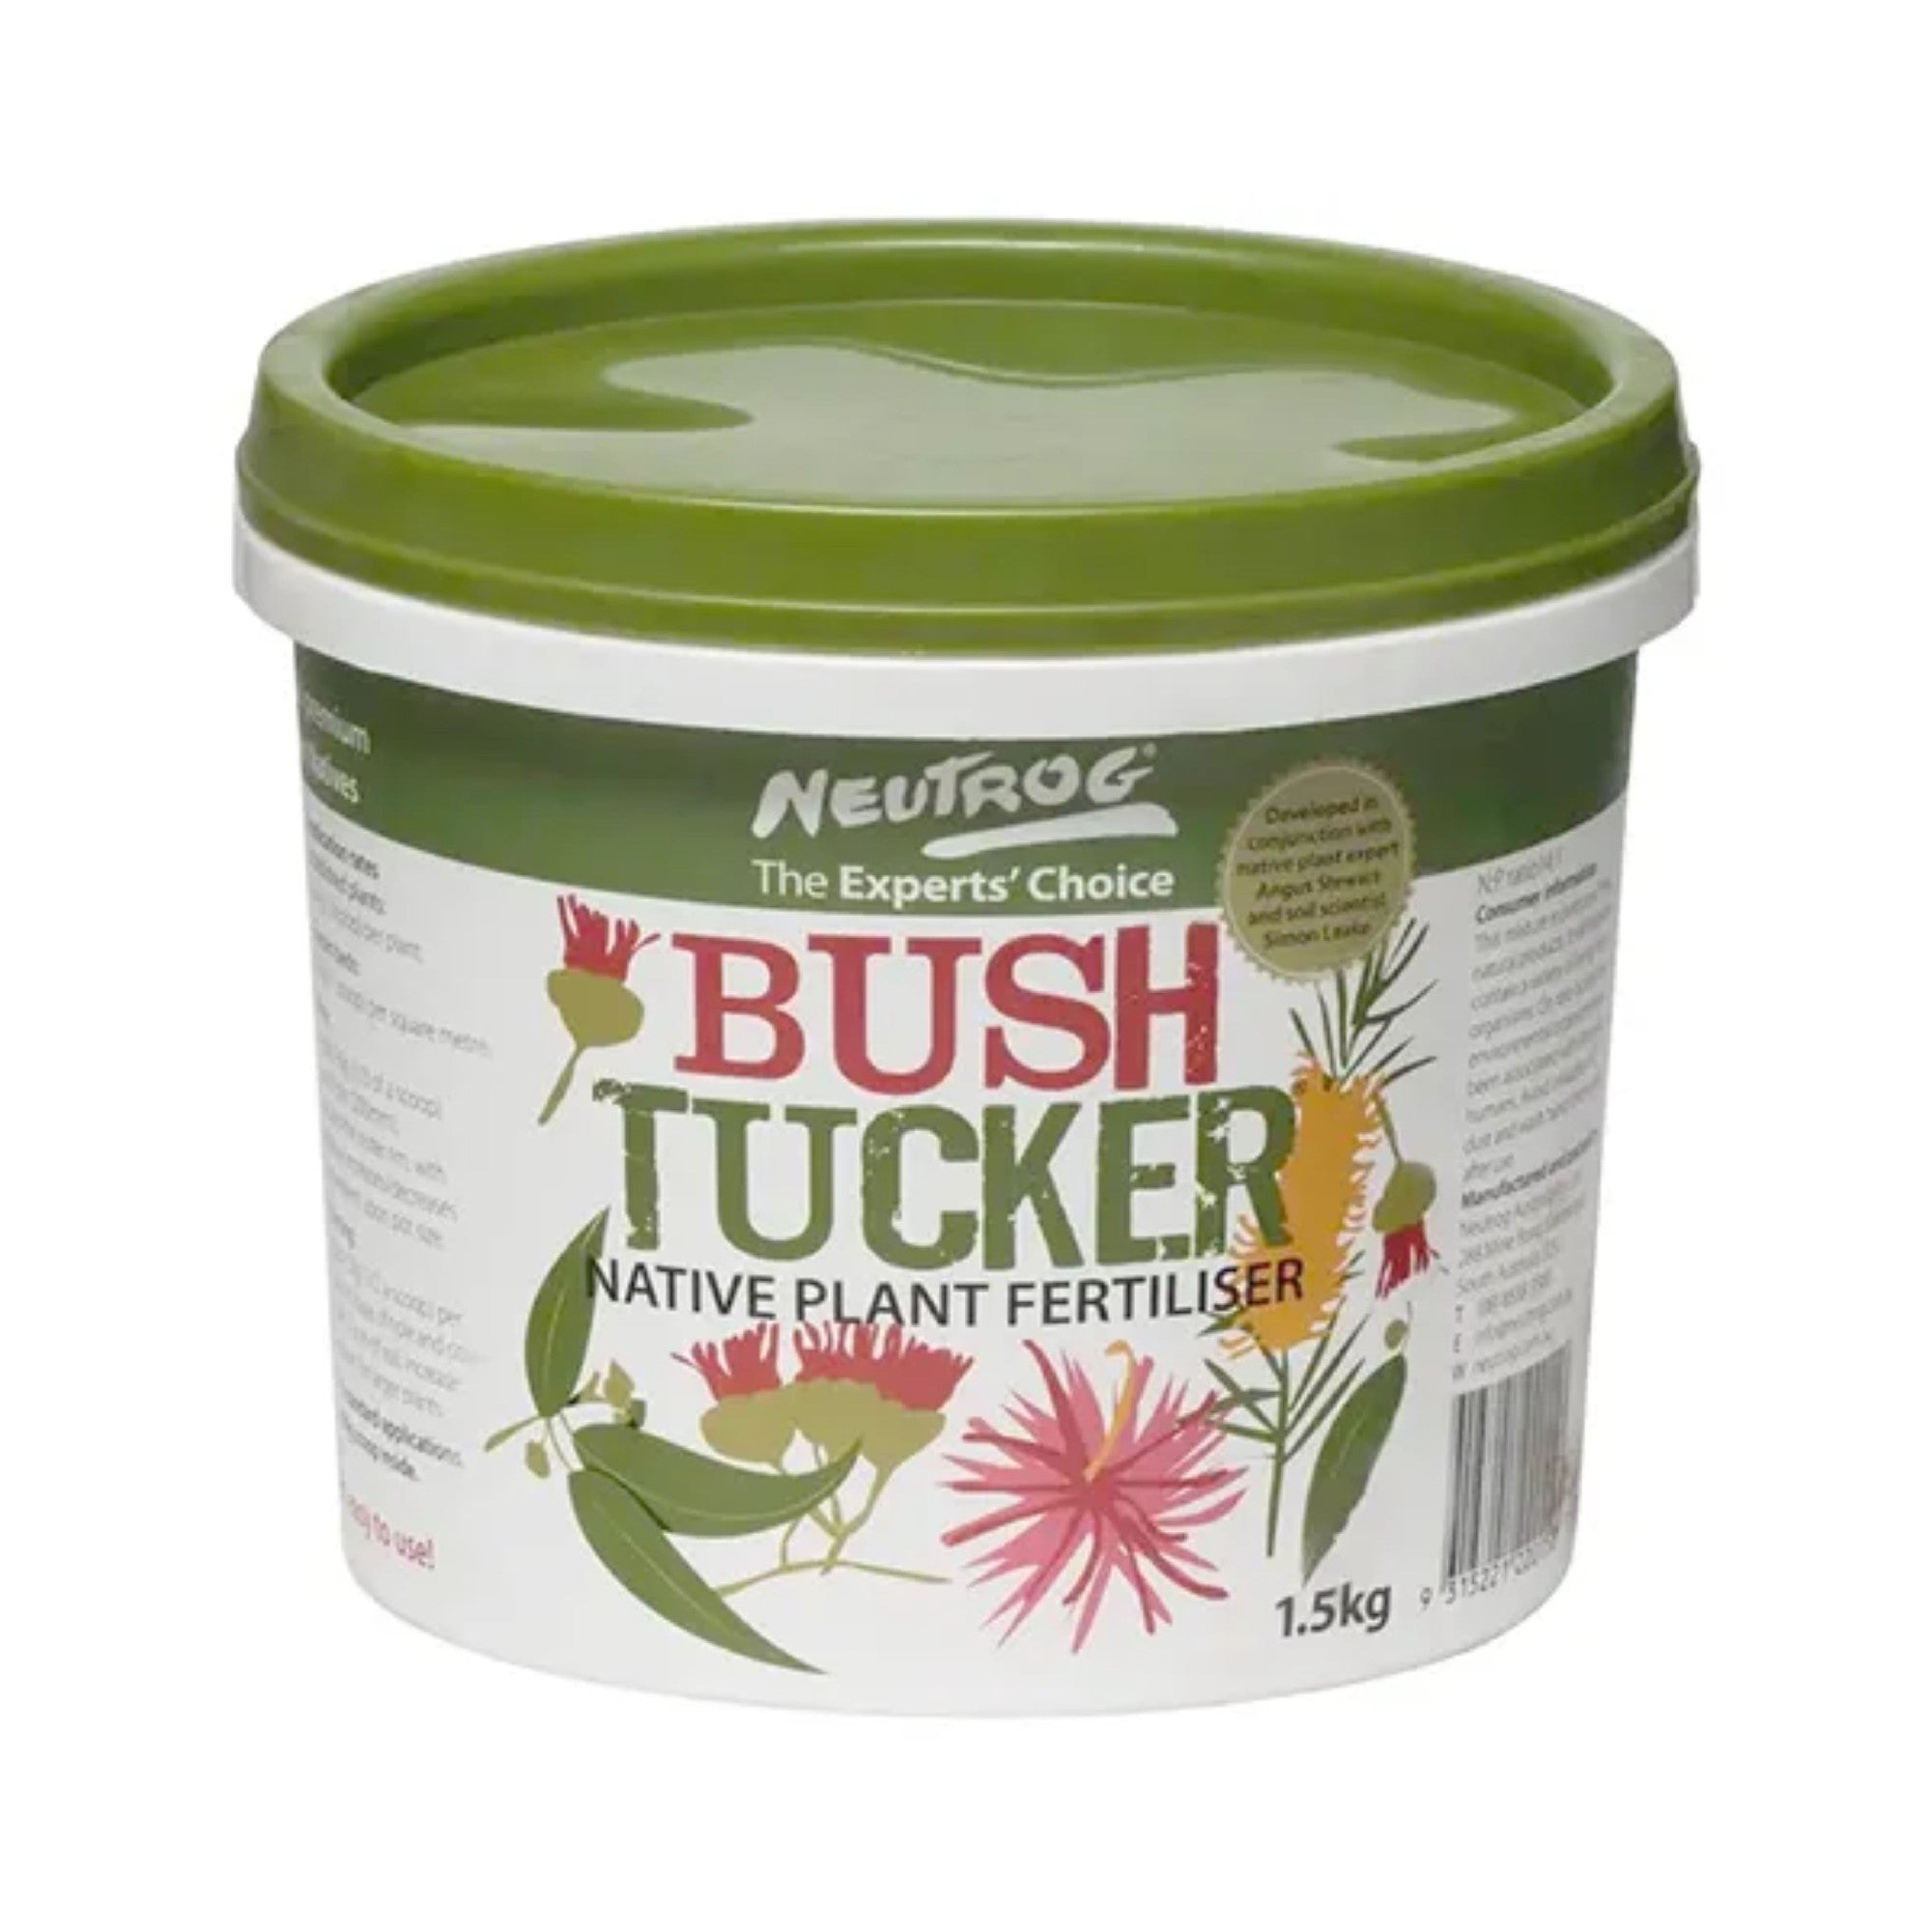 Neutrog Bush Tucker 1.5kg